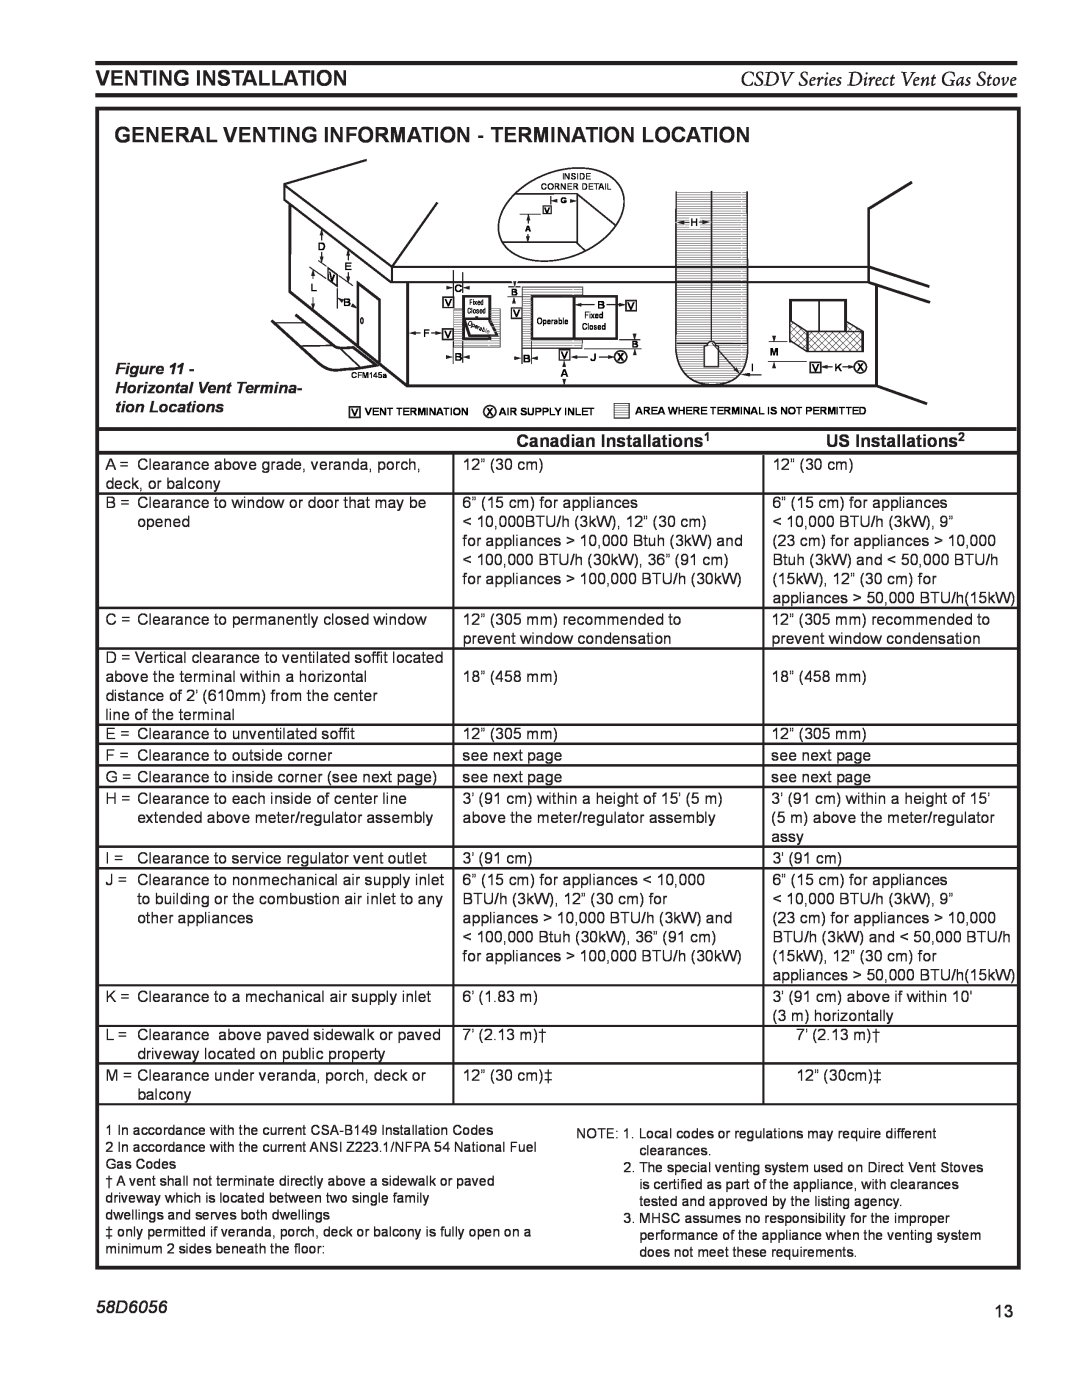 Monessen Hearth CSDV40SNV manual Venting installation, CSDV Series Direct Vent Gas Stove, Canadian Installations1, 58D6056 